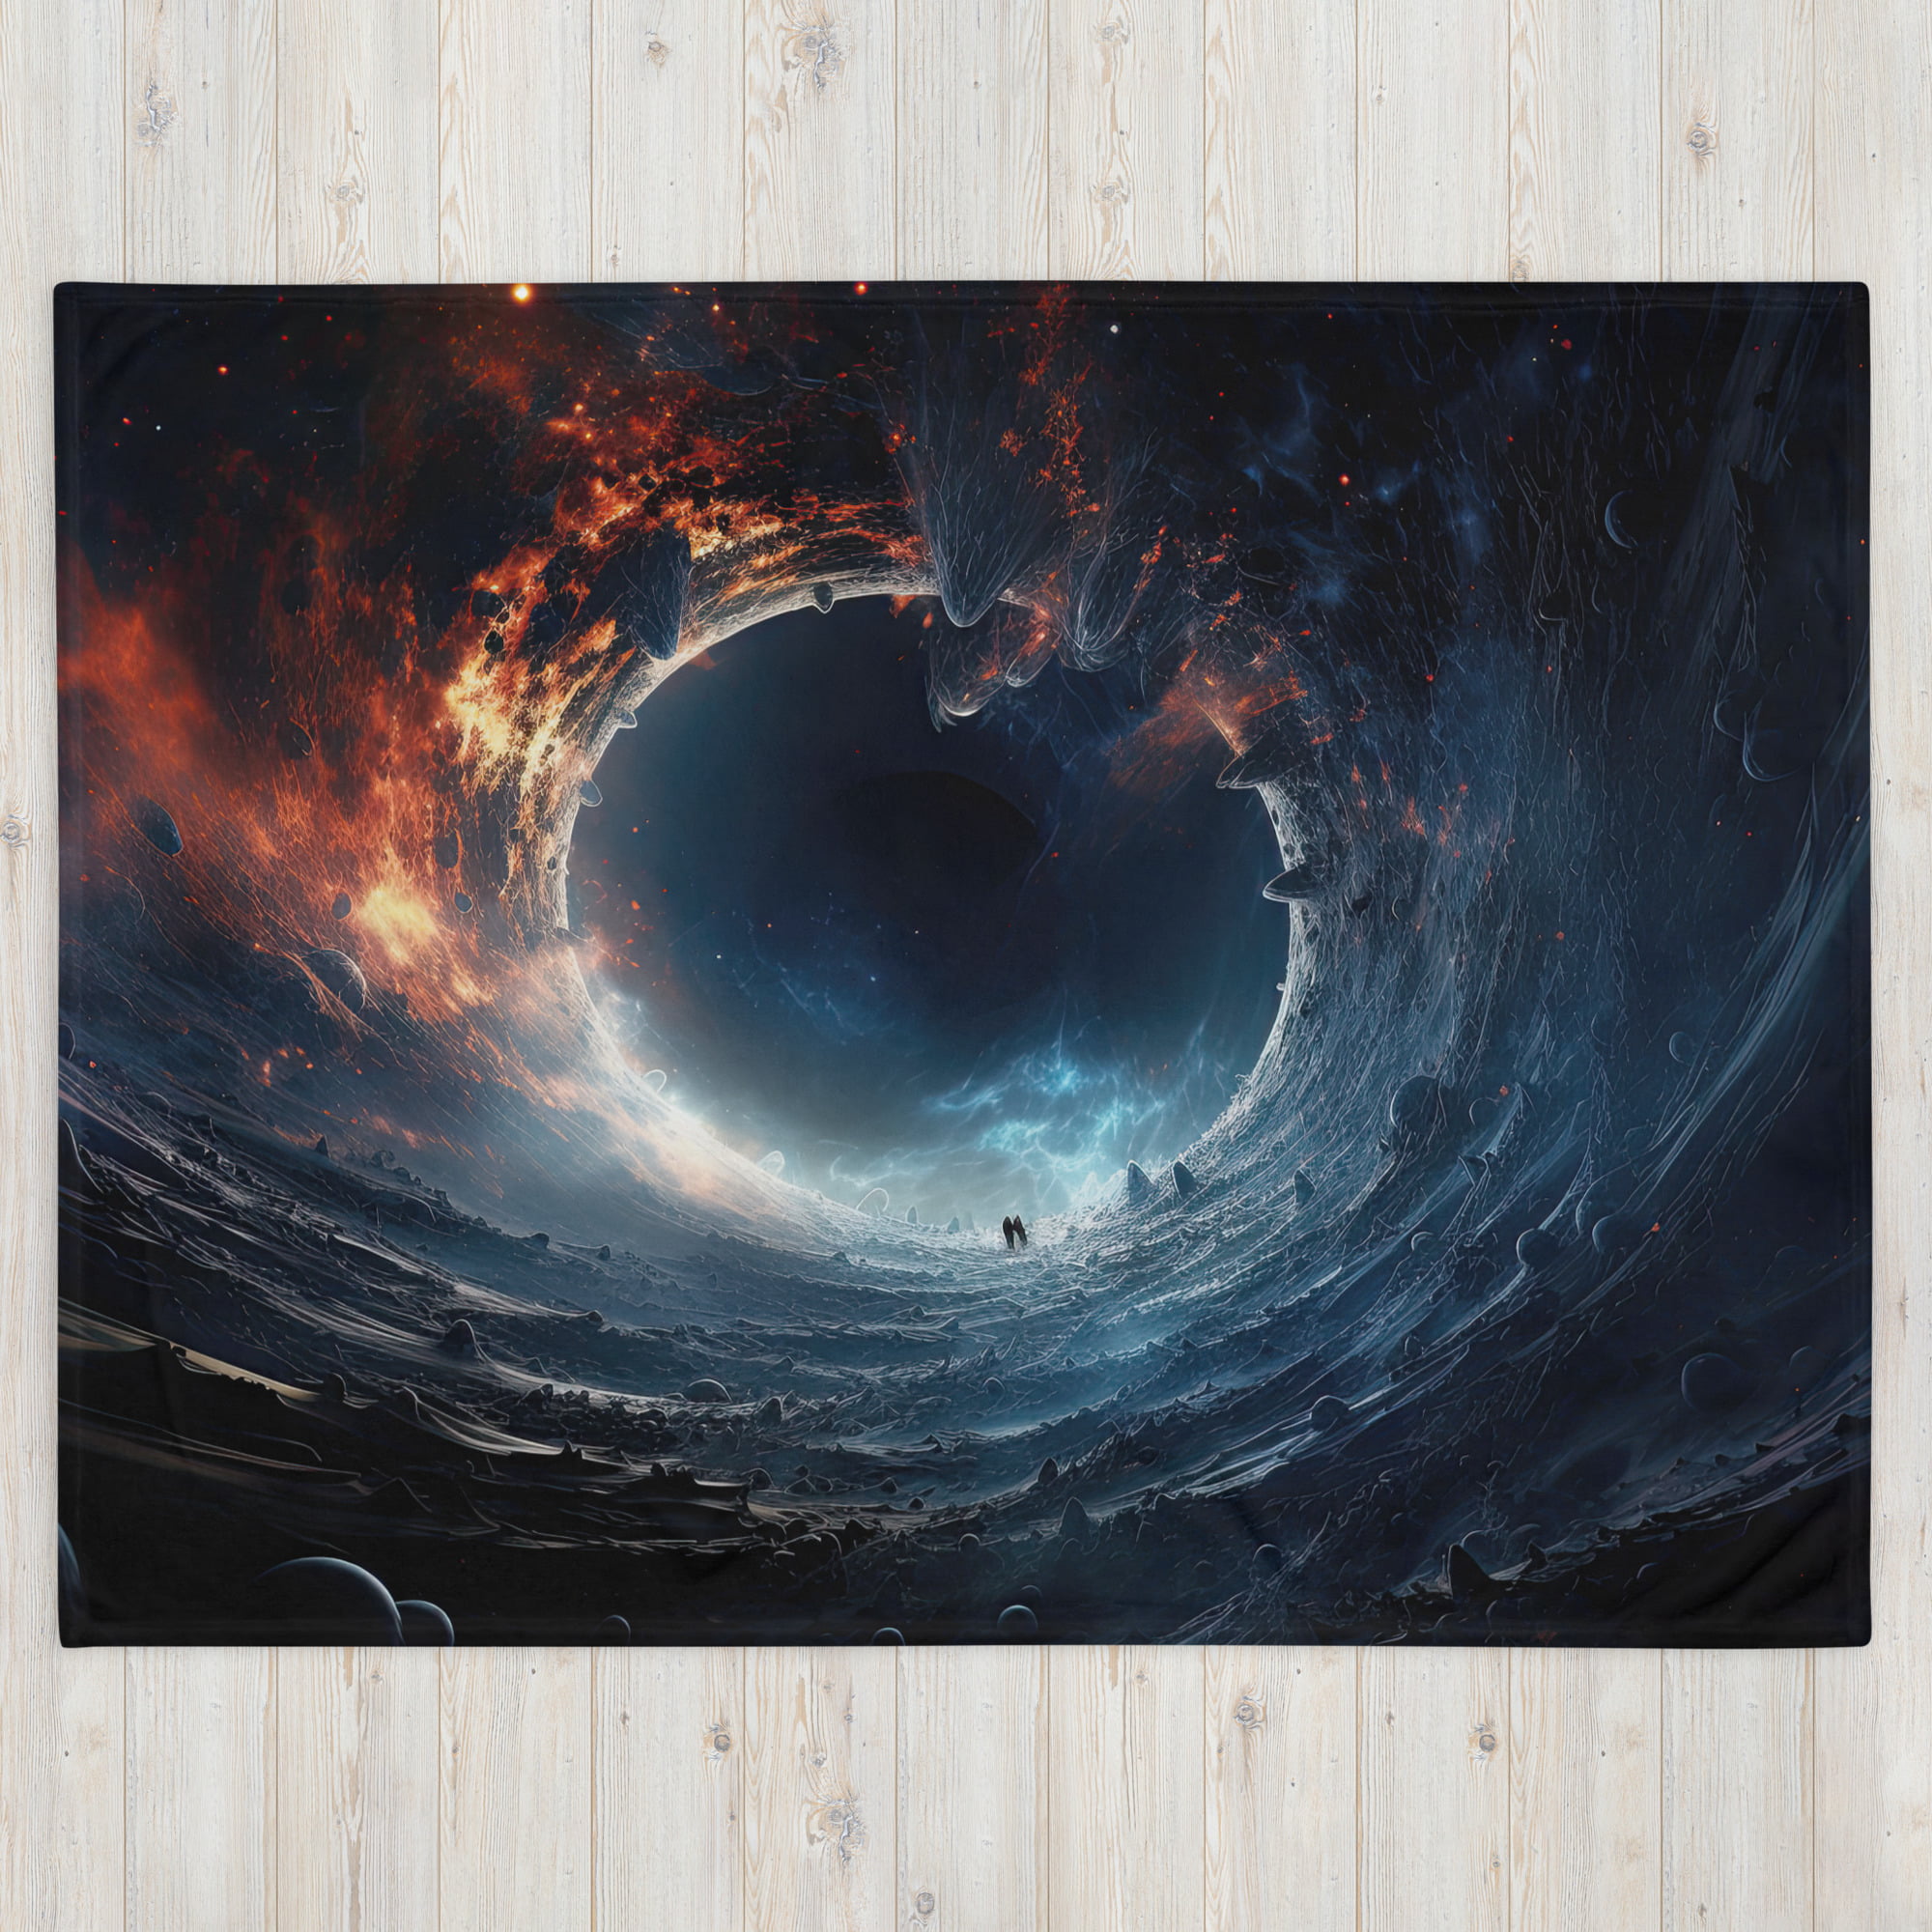 Black Hole Event Horizon Throw Blanket – 60×80